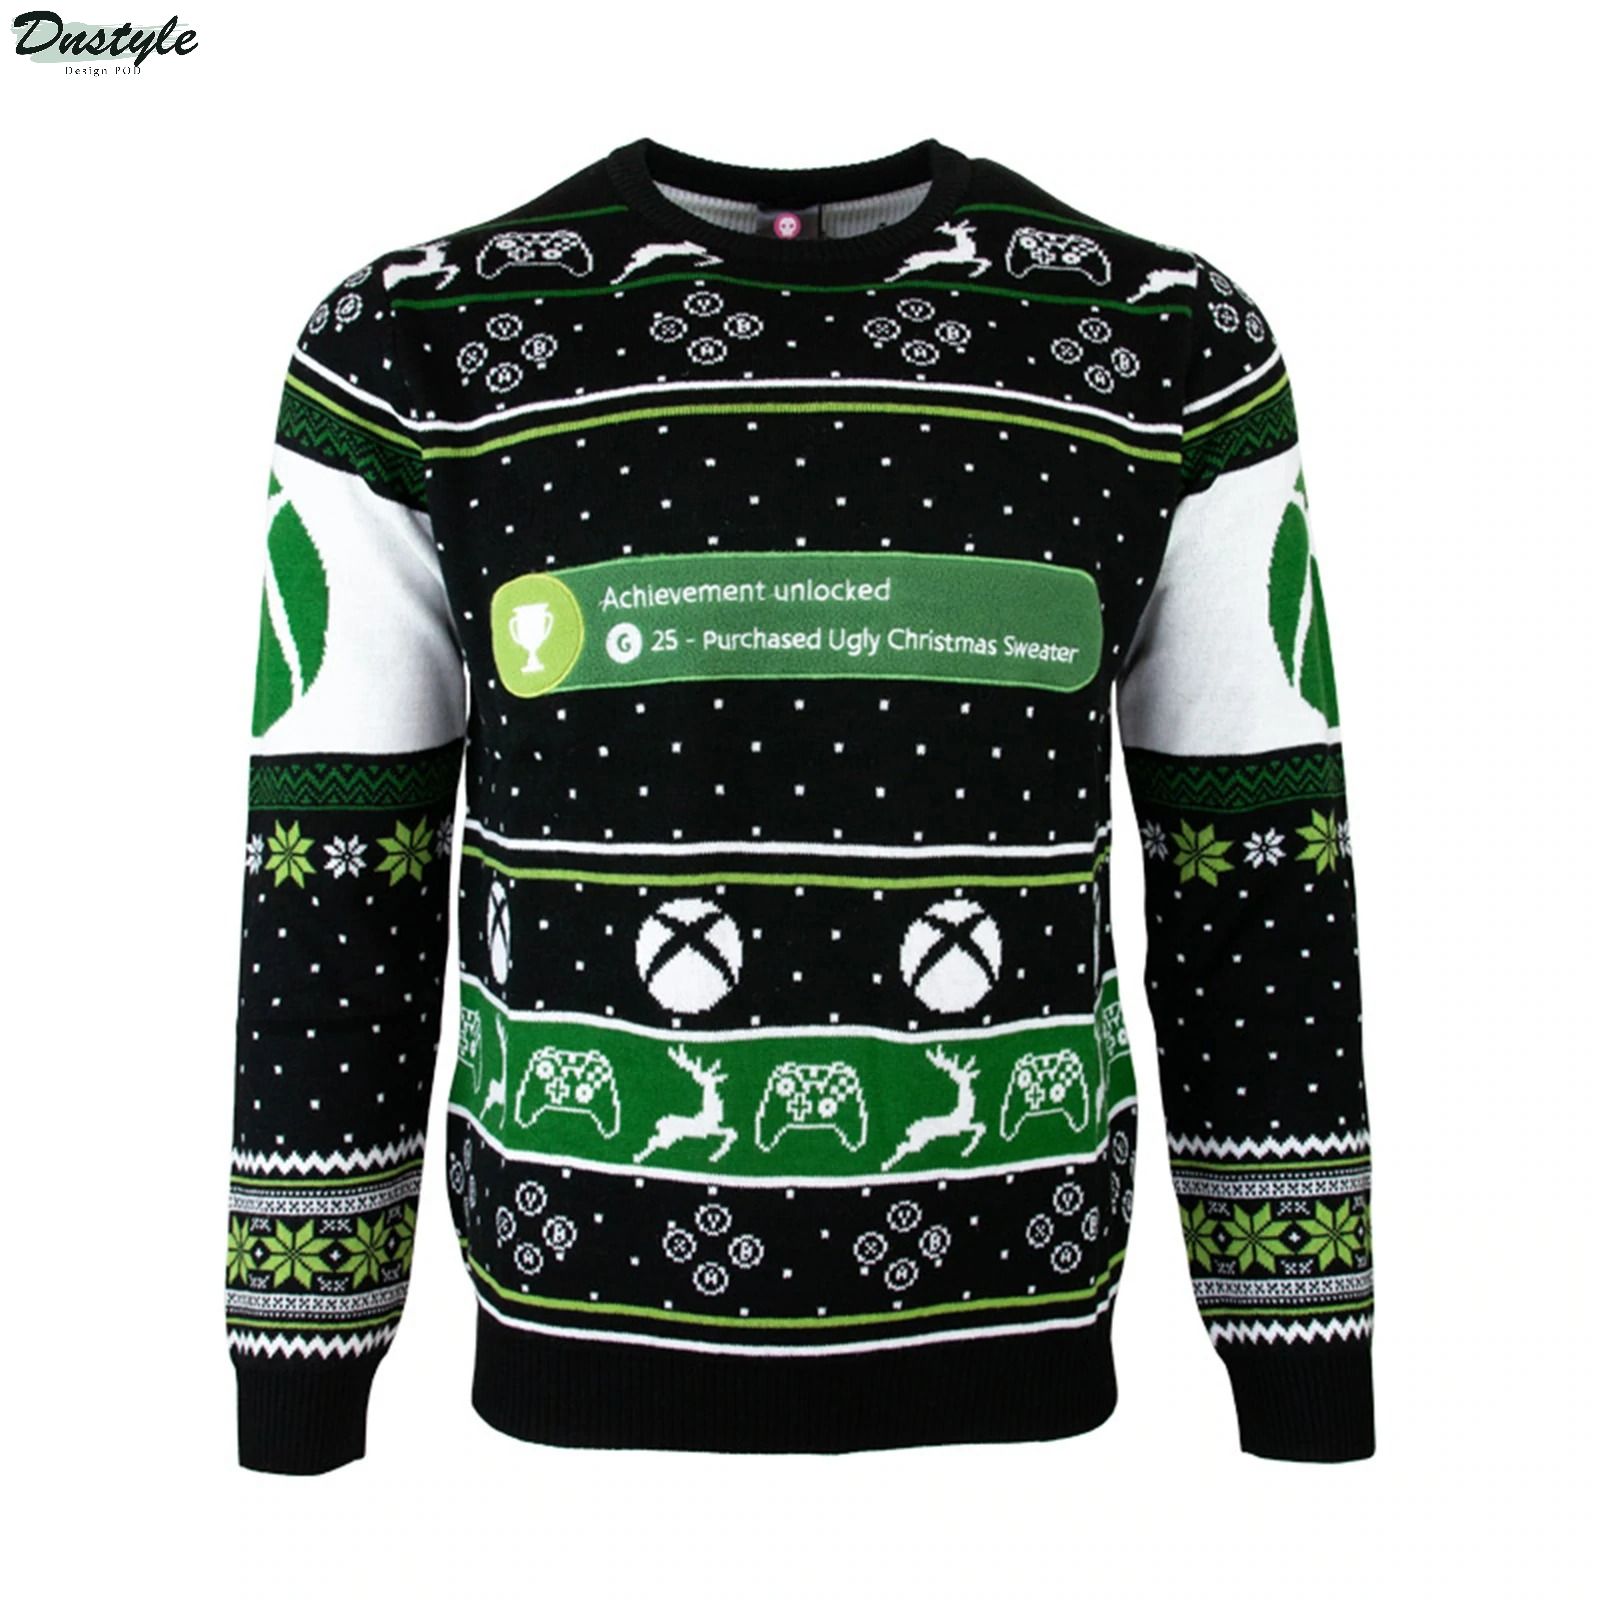 Xbox One Achievement Unlocked Ugly Sweater